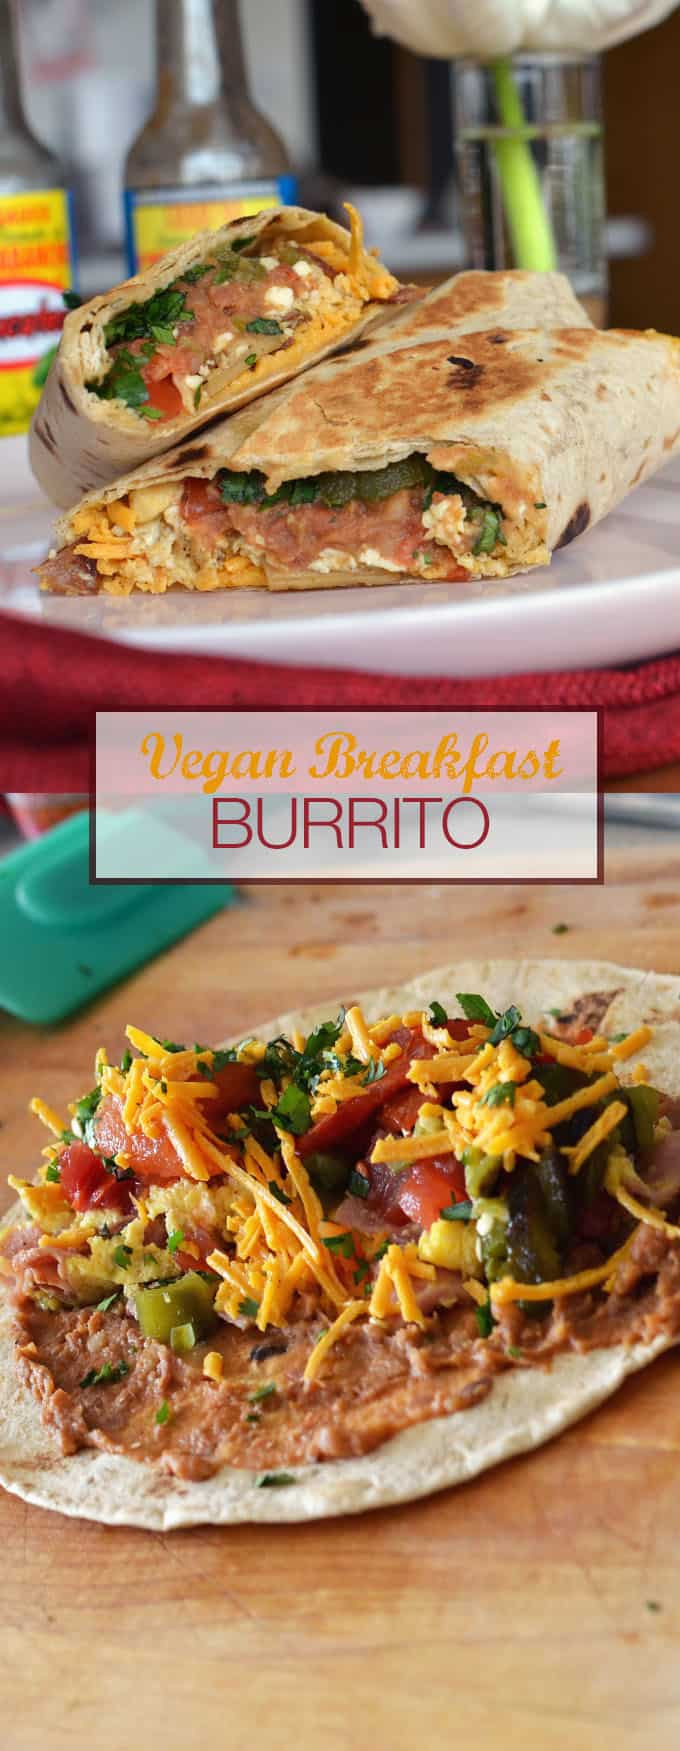 Vegetarian Breakfast Burrito Recipes
 Best Vegan Breakfast Burrito